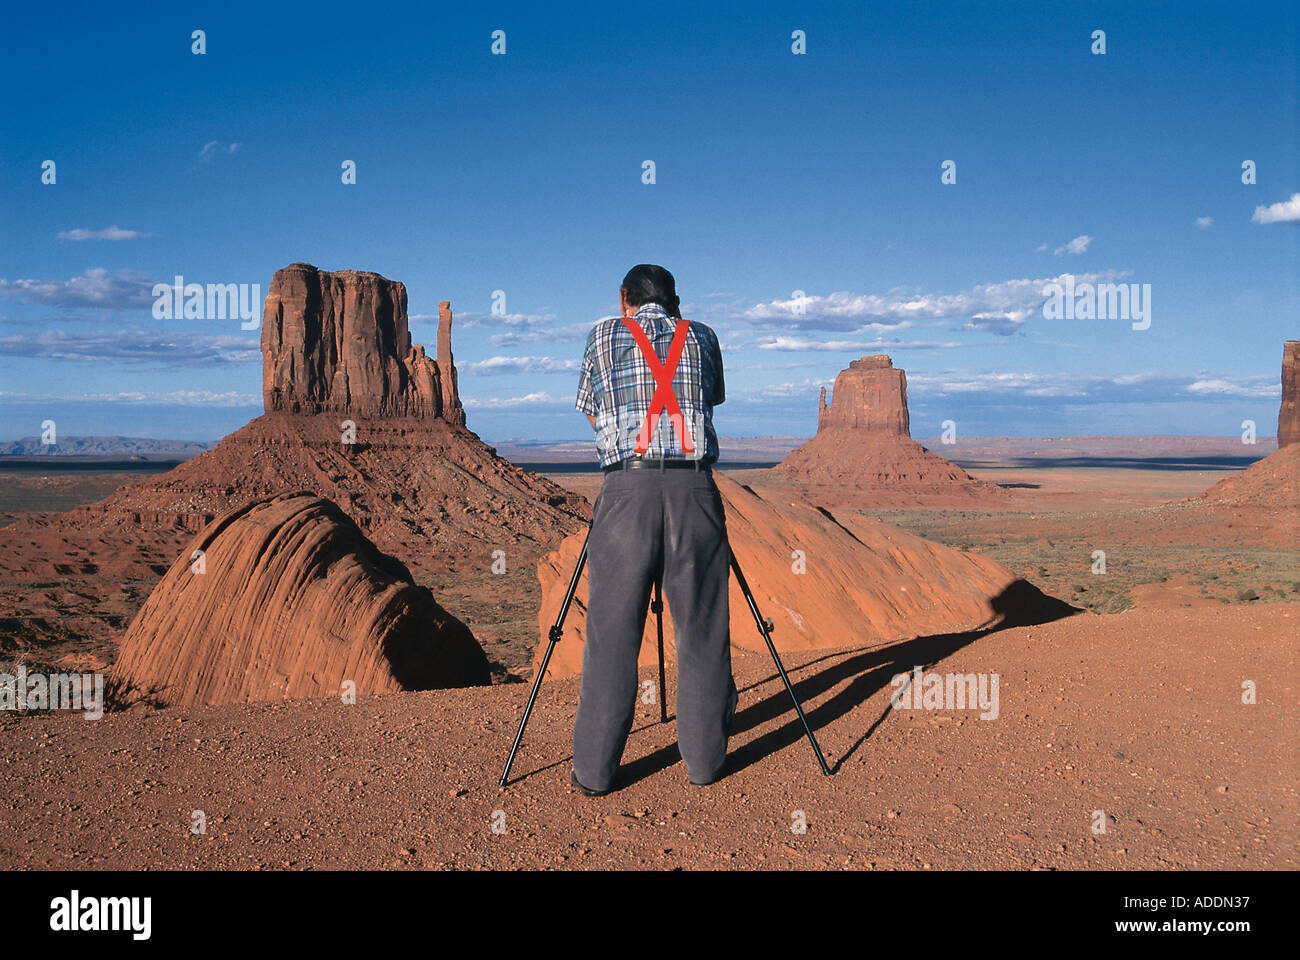 Fotograf bei der Arbeit, Gene Lambert, Monument Valley Tribal Park, Arizona, USA Stock Photo